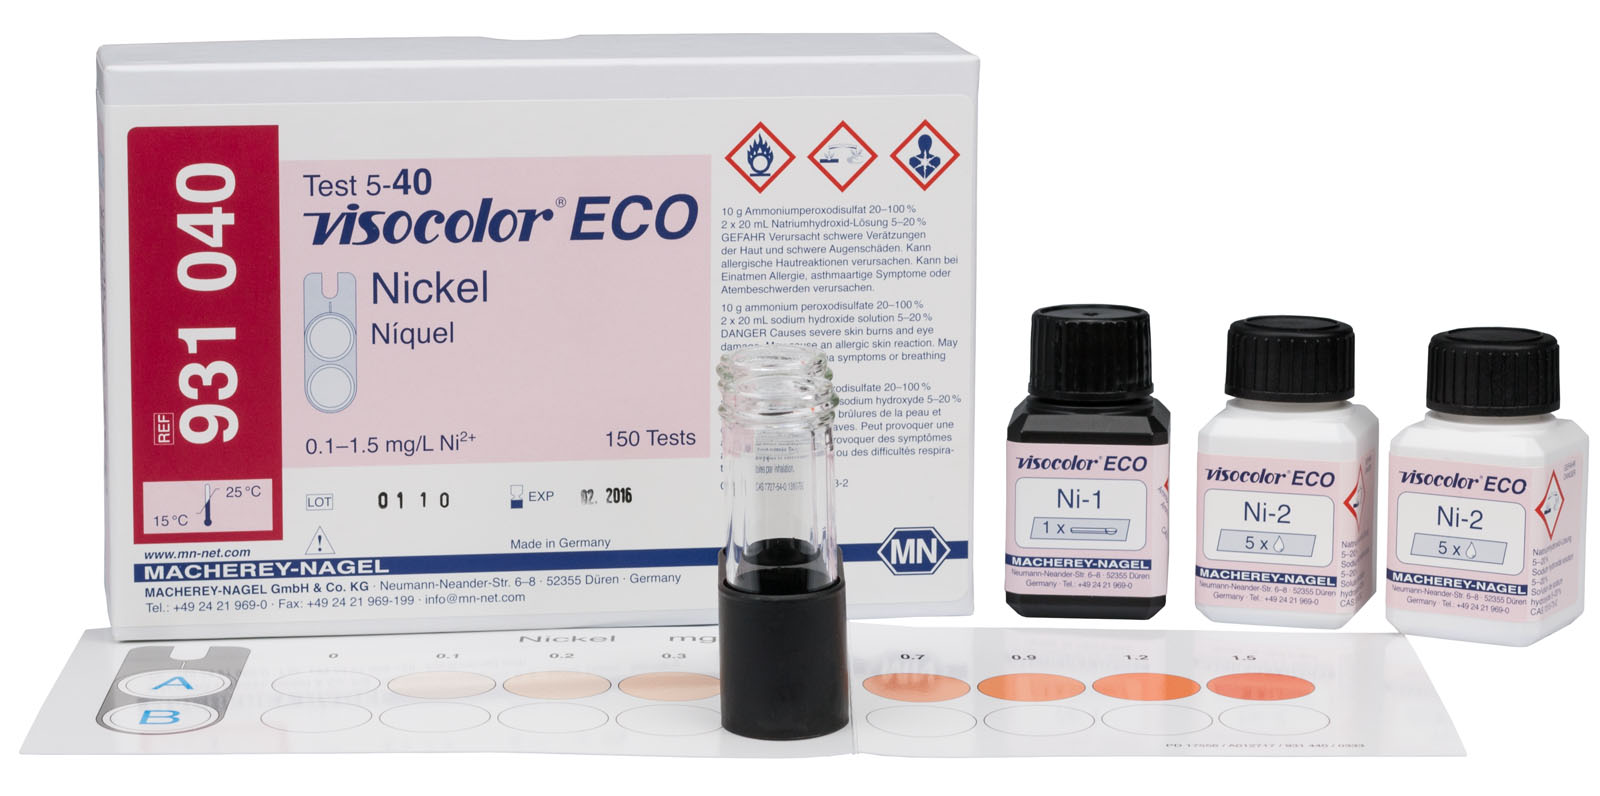 VISOCOLOR® ECO Nickel Test Kit